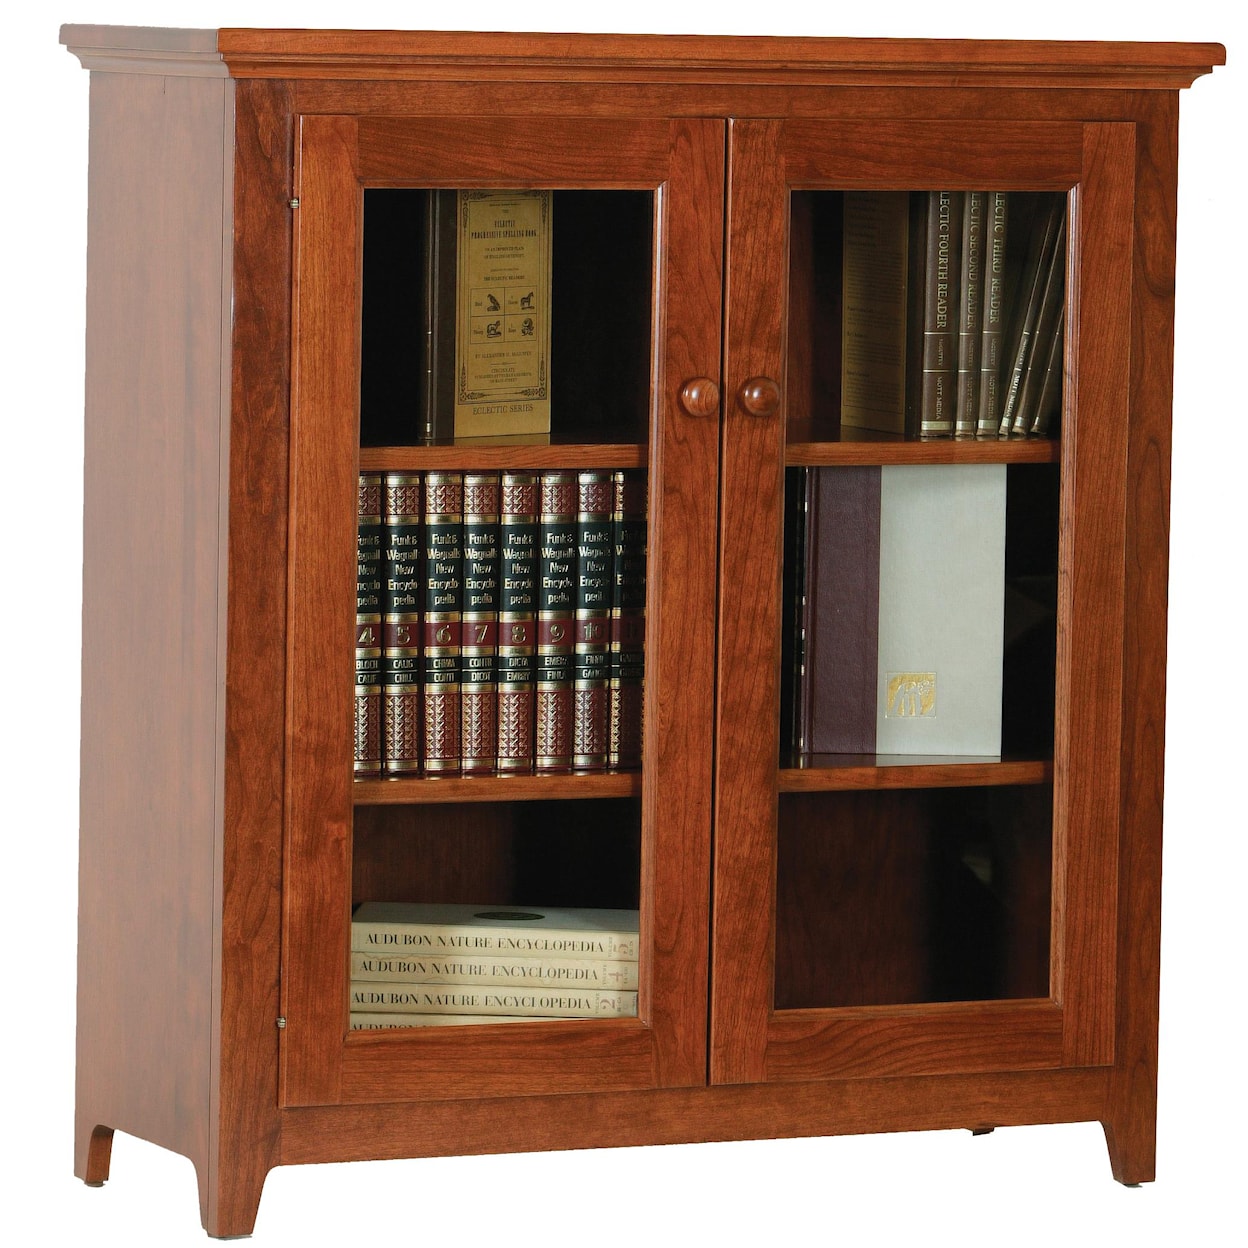 Wonder Wood Wonder Wood Bookcases Customizable Doughty Ridge Bookcase